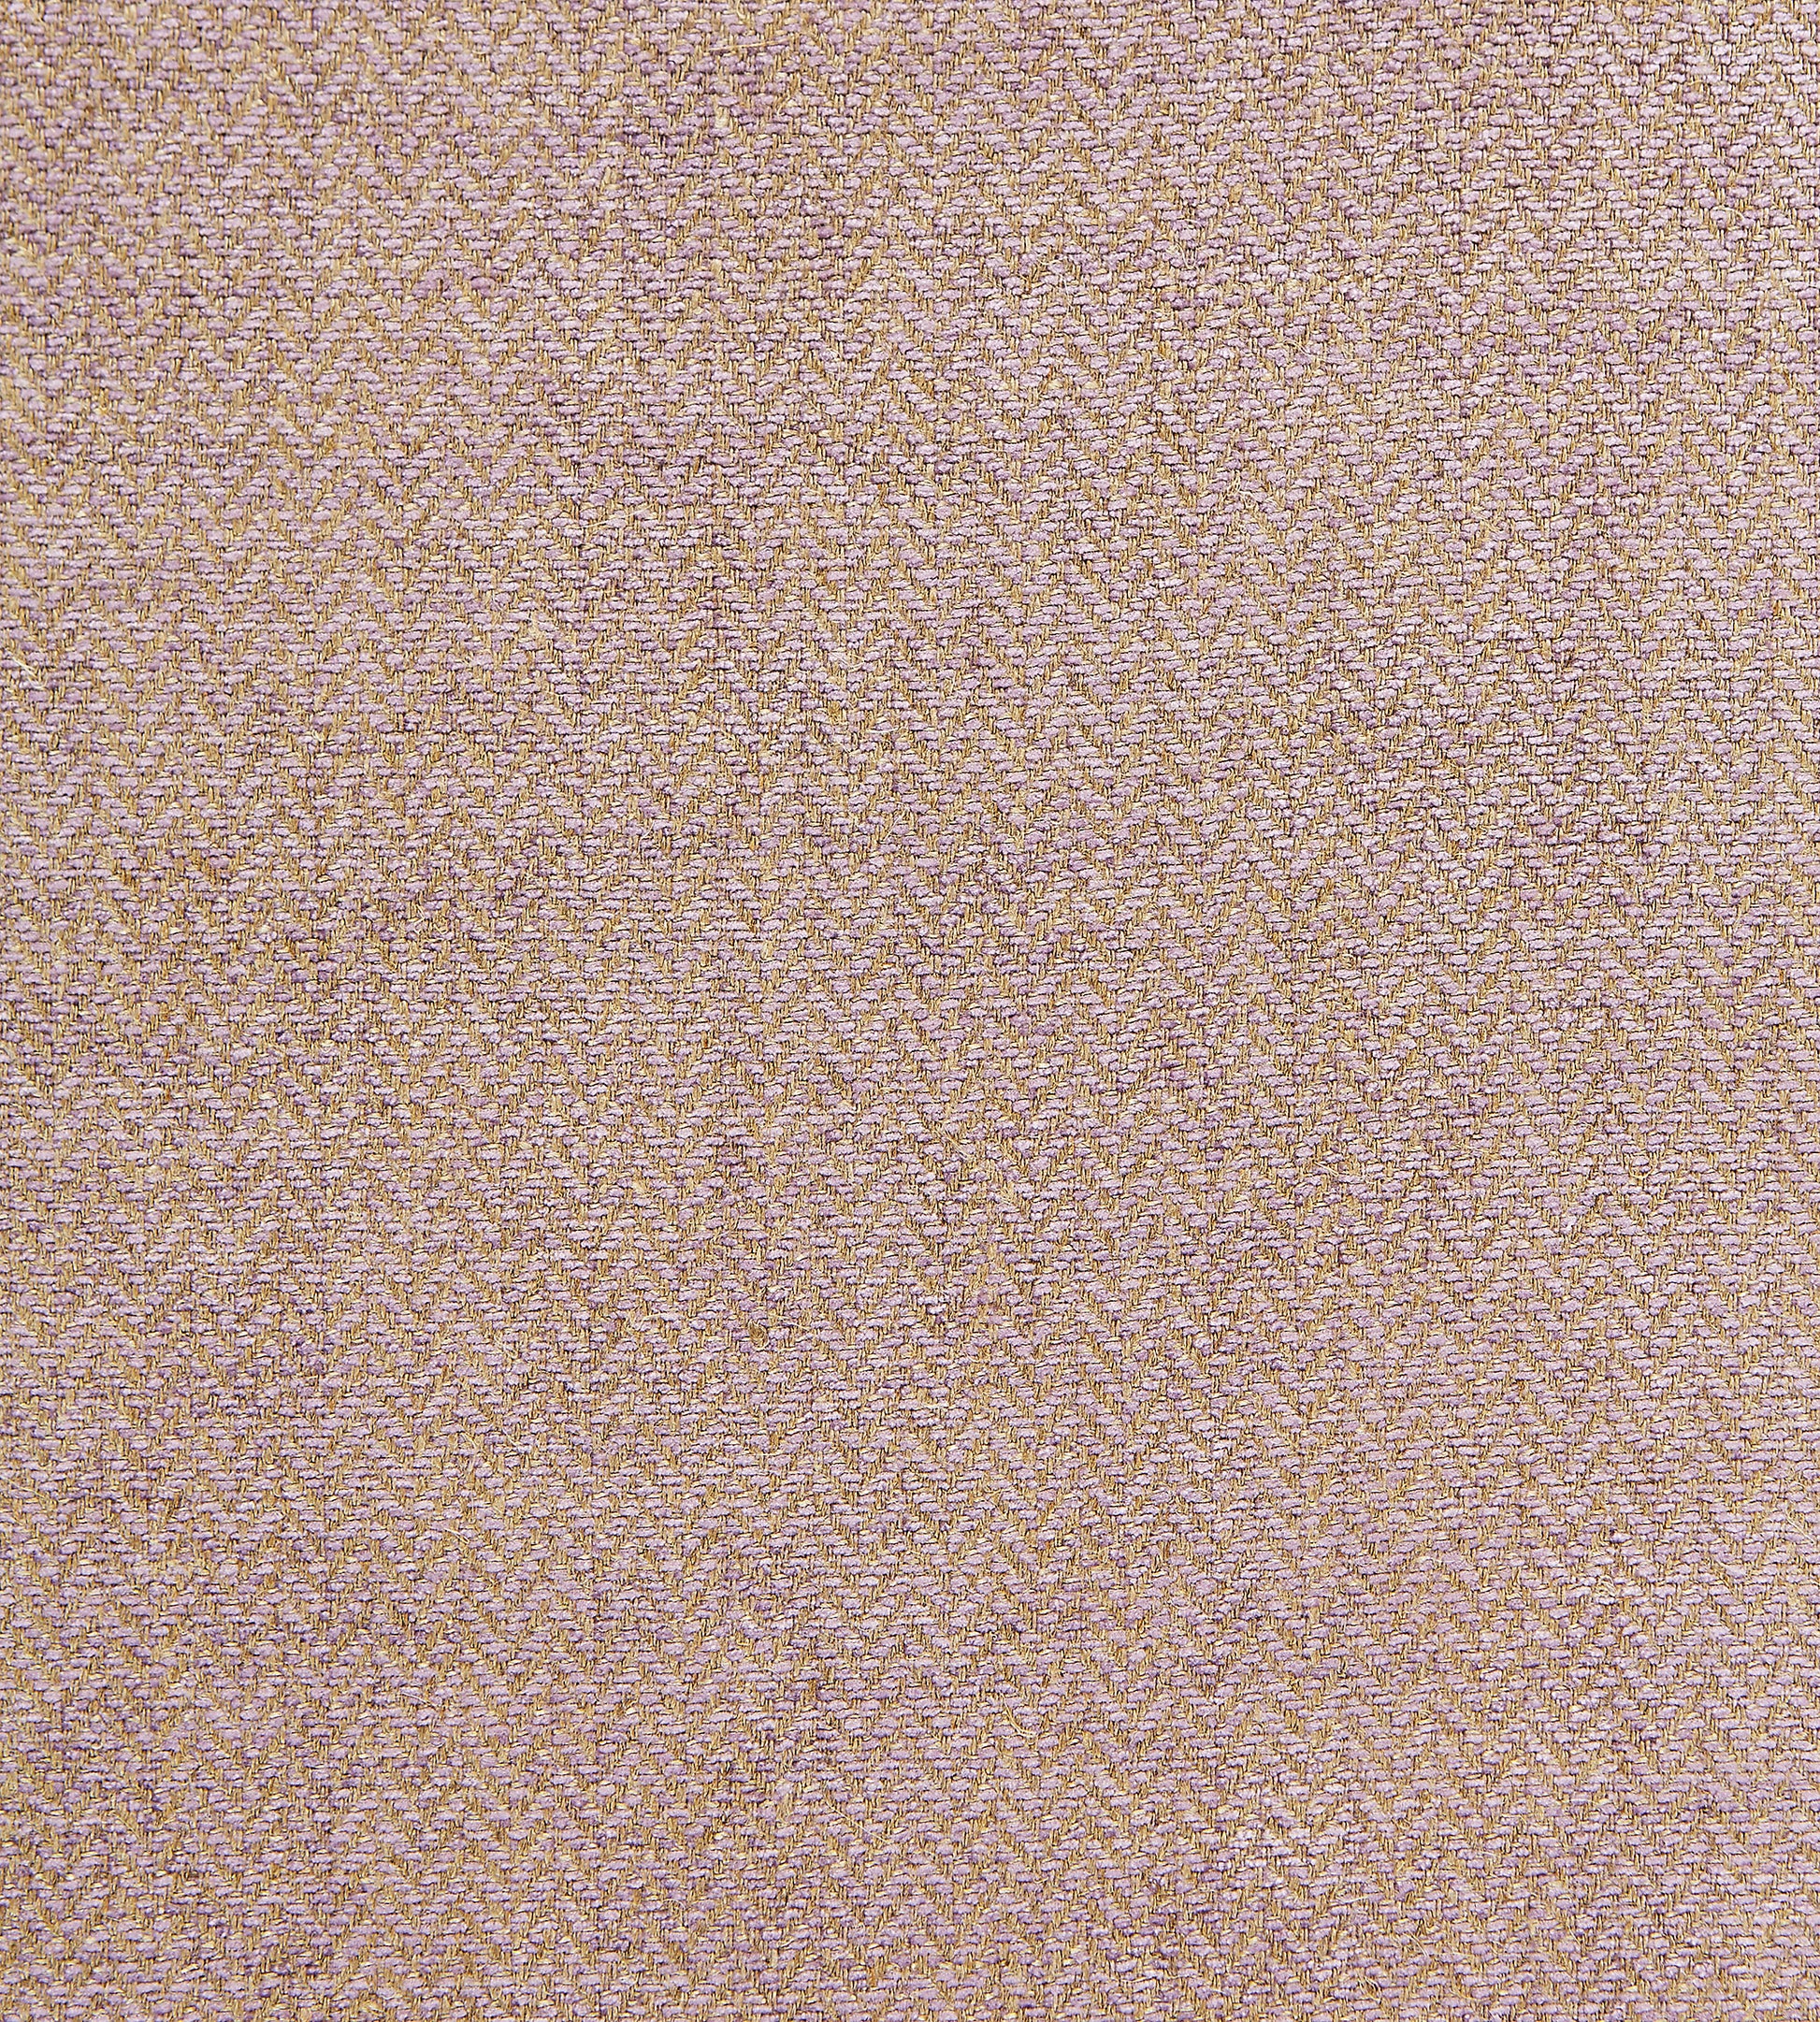 Purchase Scalamandre Fabric Pattern SC 001527006, Oxford Herringbone Weave Lavender 1